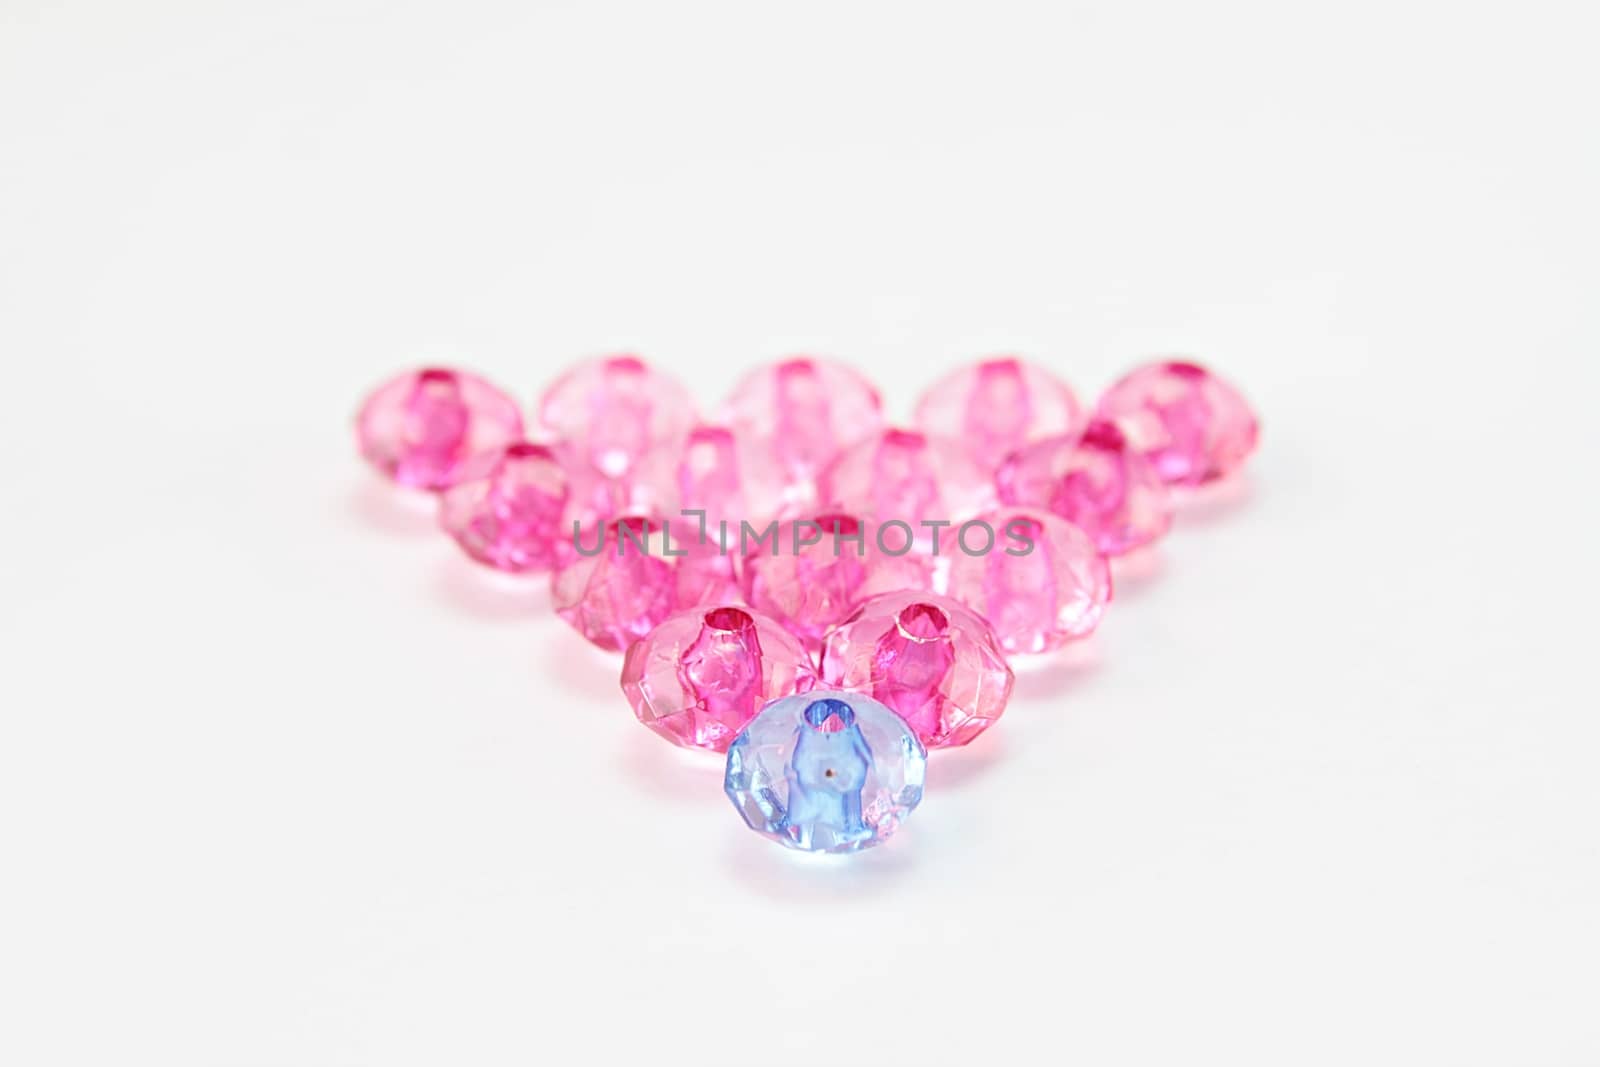 Leadership or teamwork concept : Blue crystal bead leading pink ones, blue crystal bead among pink